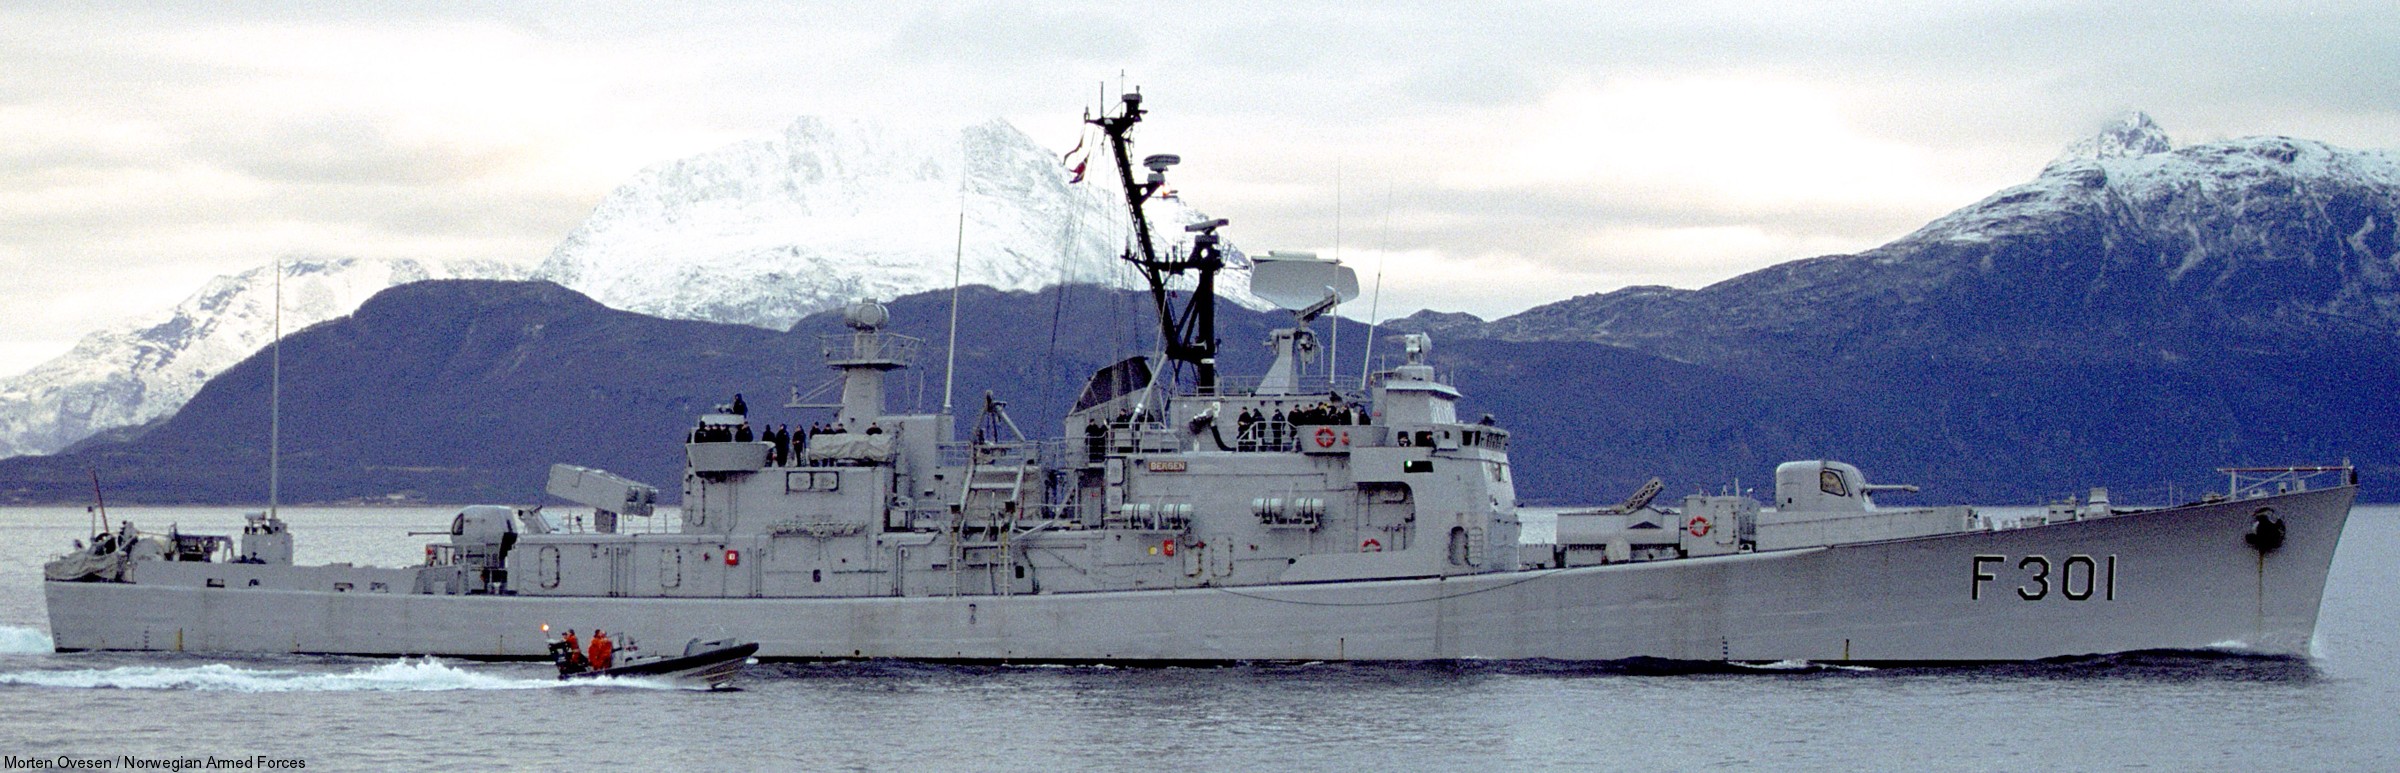 f-301 hnoms bergen knm oslo class frigate royal norwegian navy sjoforsvaret 08